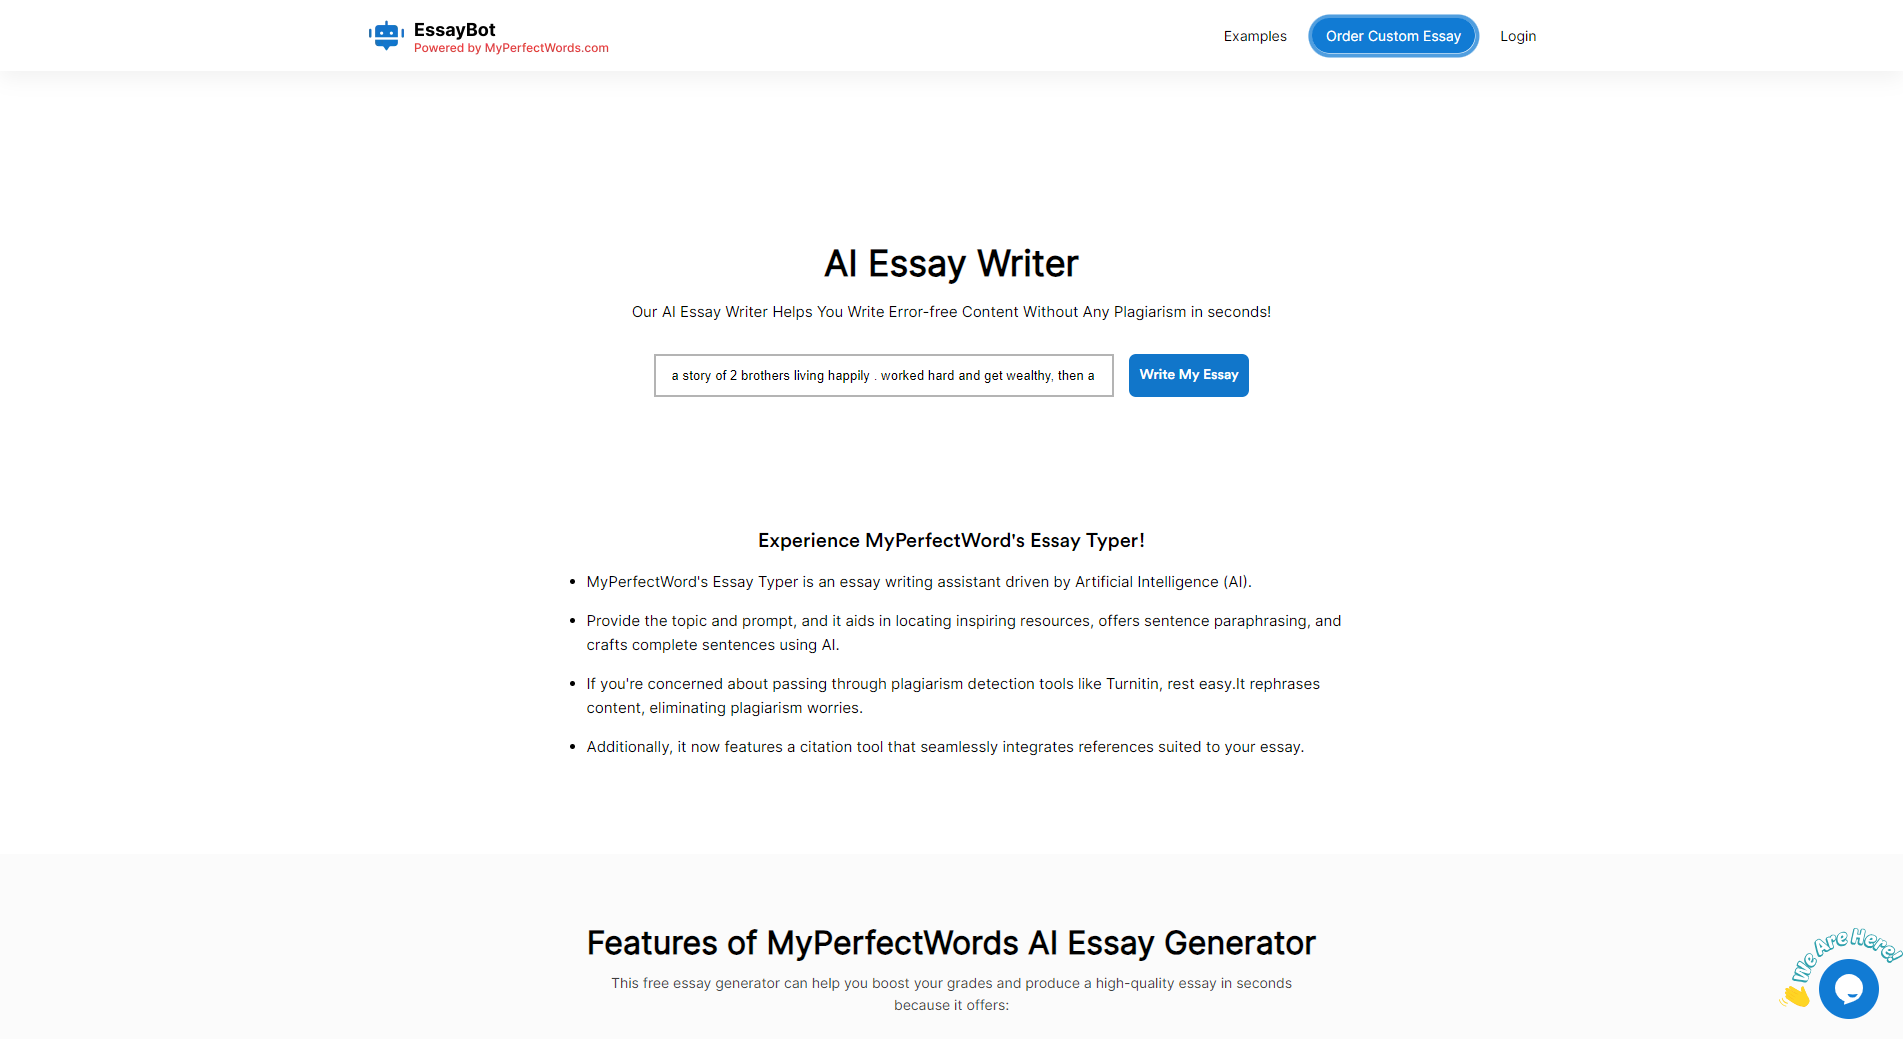 MyPerfectWords.com Essay Bot